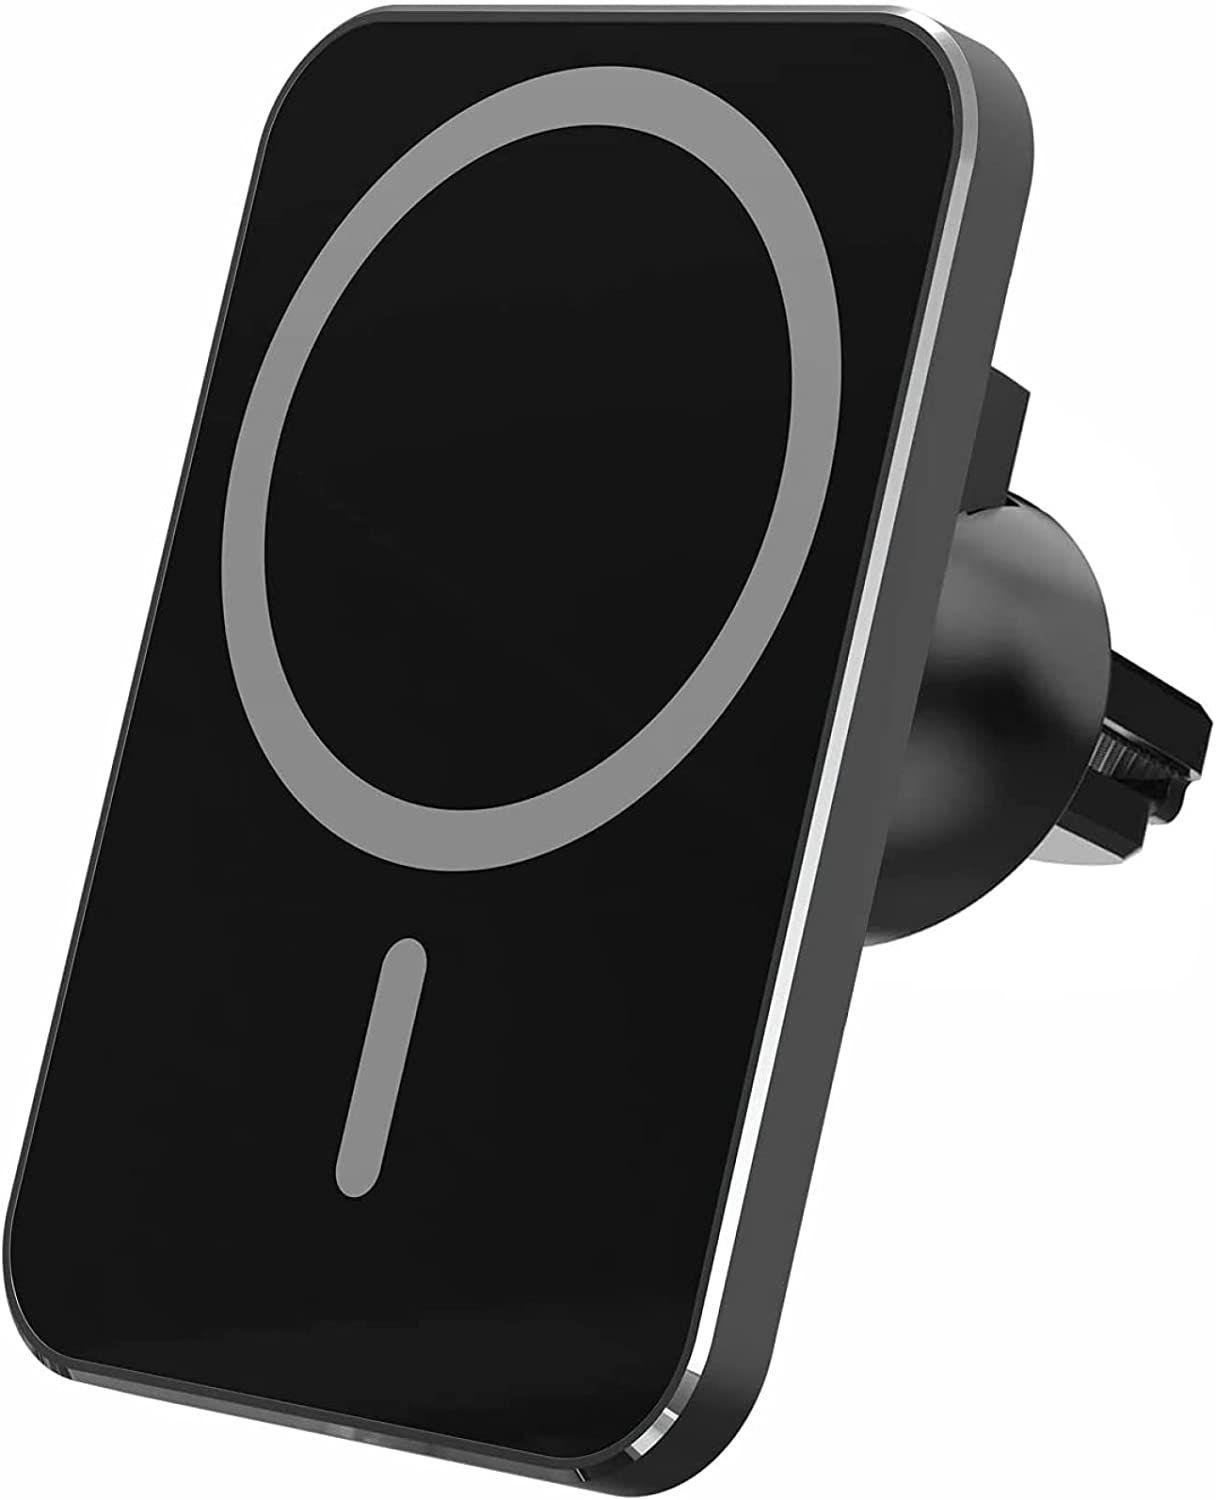 Chargeur voiture sans fil iPhone  Chargeur QI induction pour iPhone